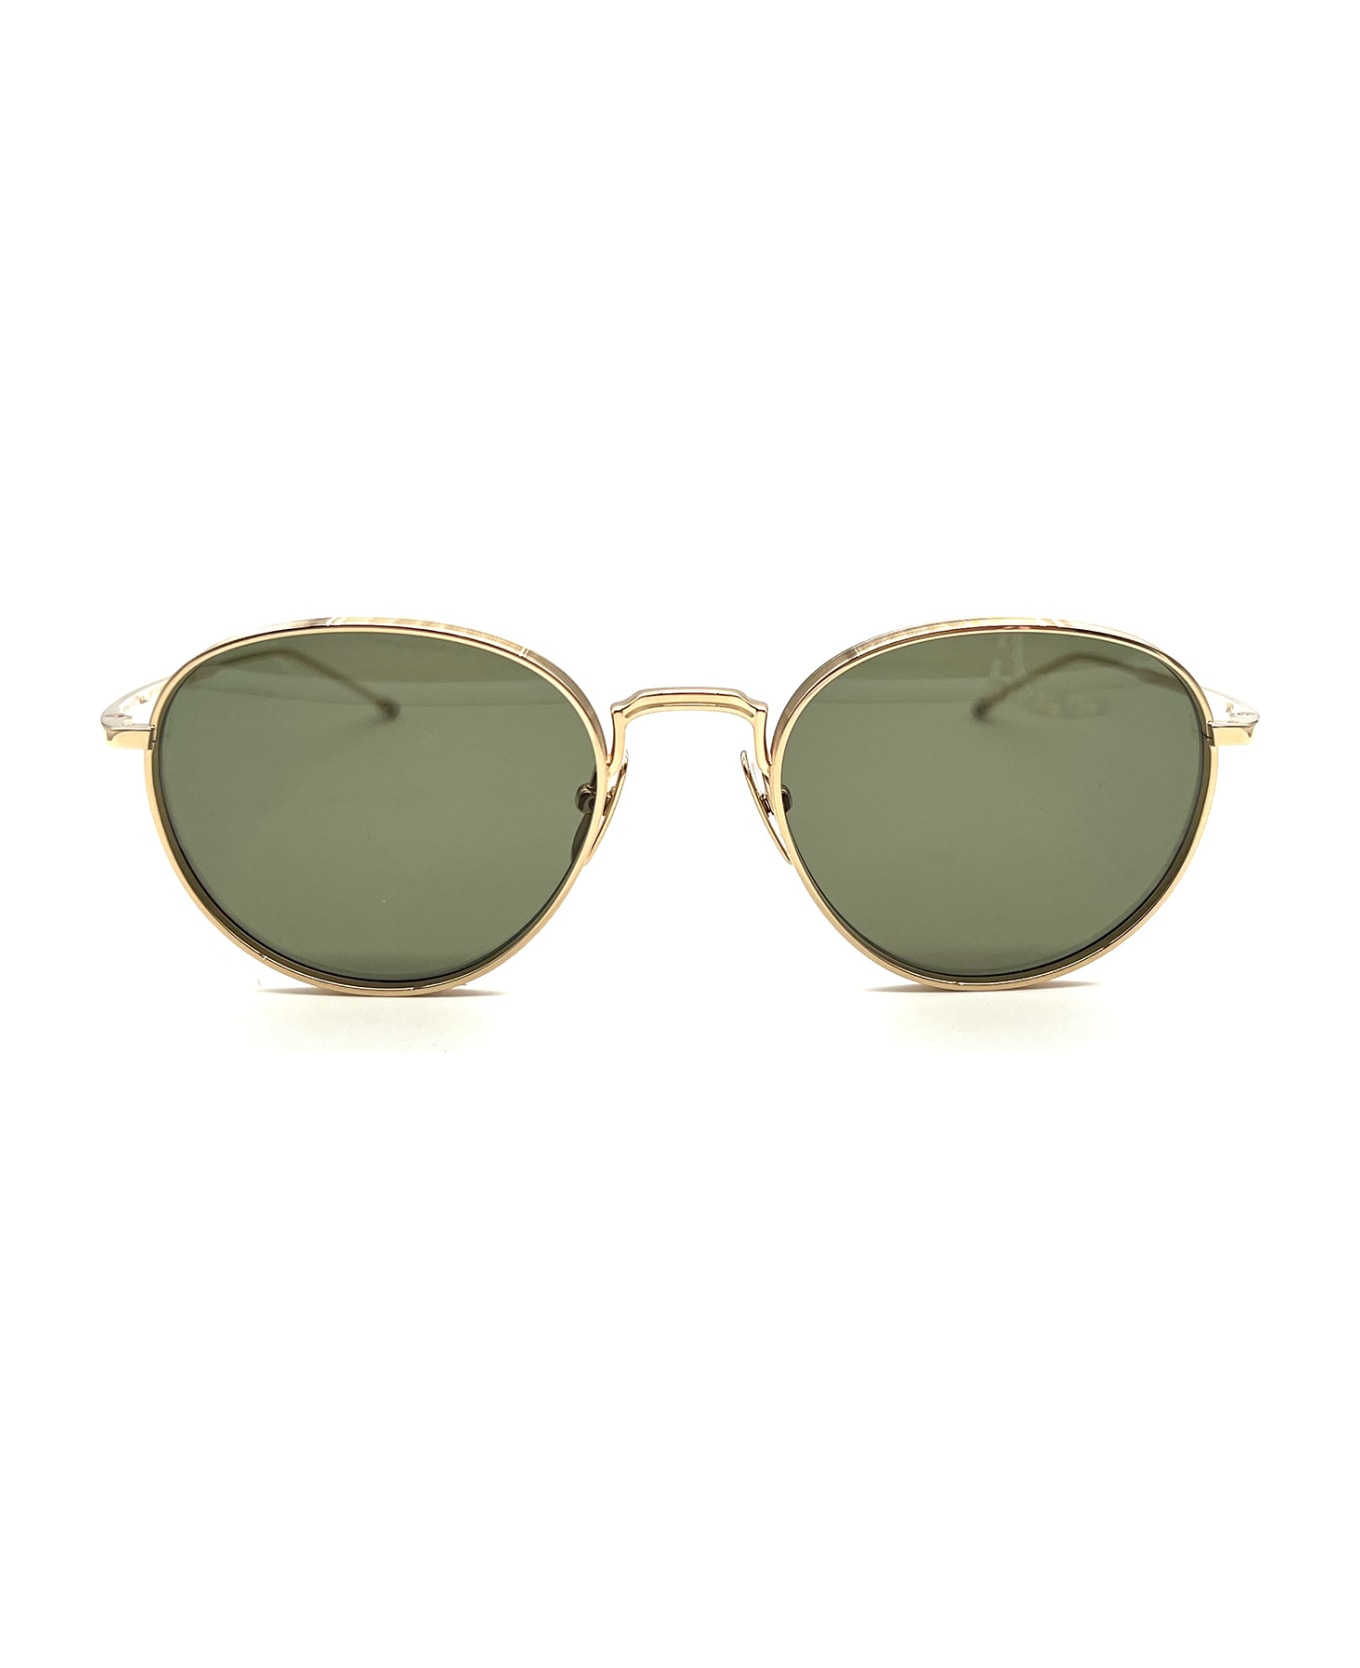 Thom Browne UES119A/G0001 Sunglasses - White Gold